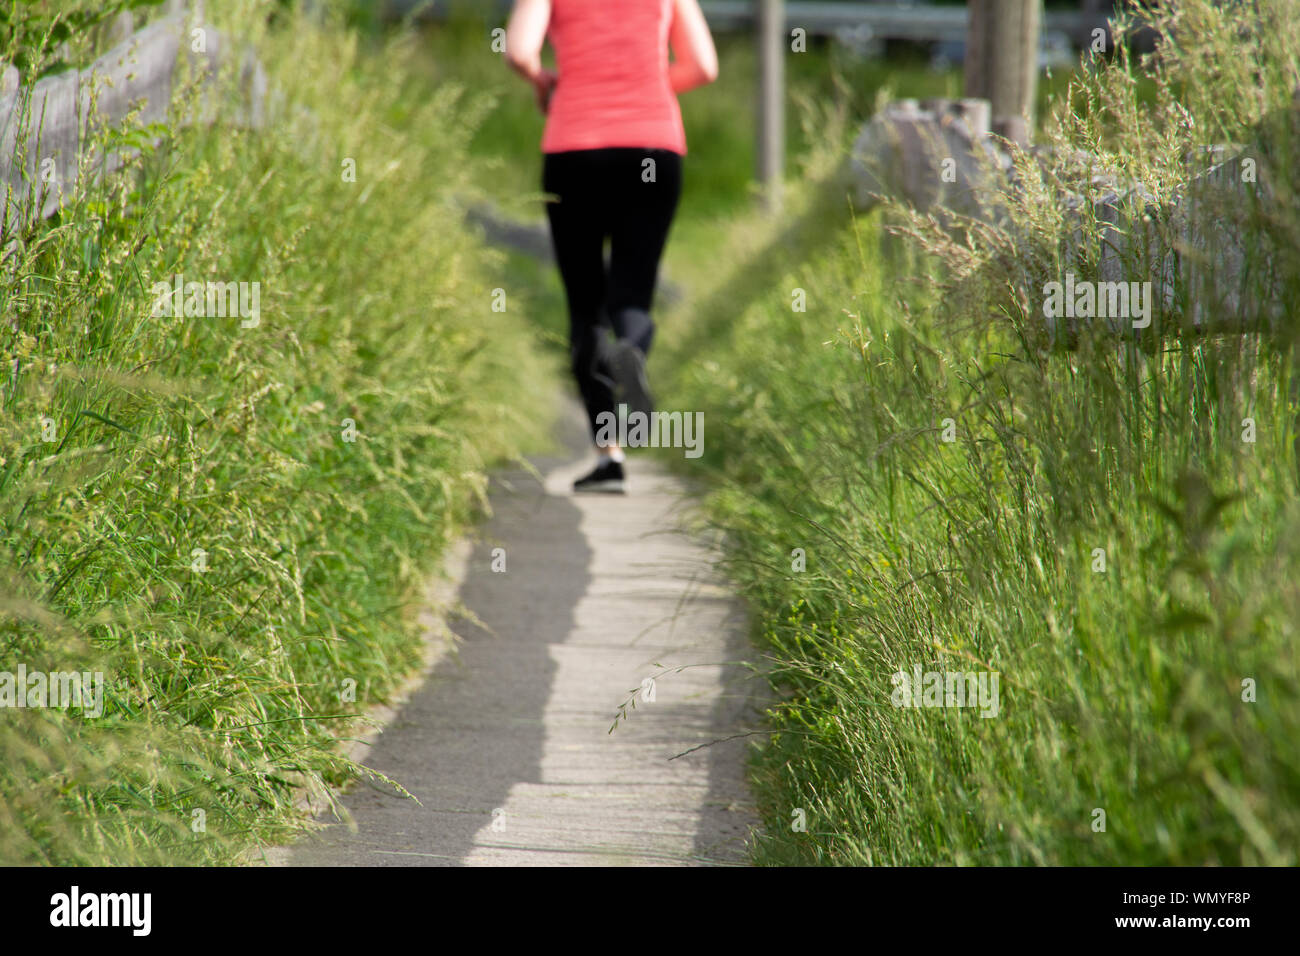 Passende Frau verläuft entlang Pfad in schwarze Leggings und rosa Top Stockfoto